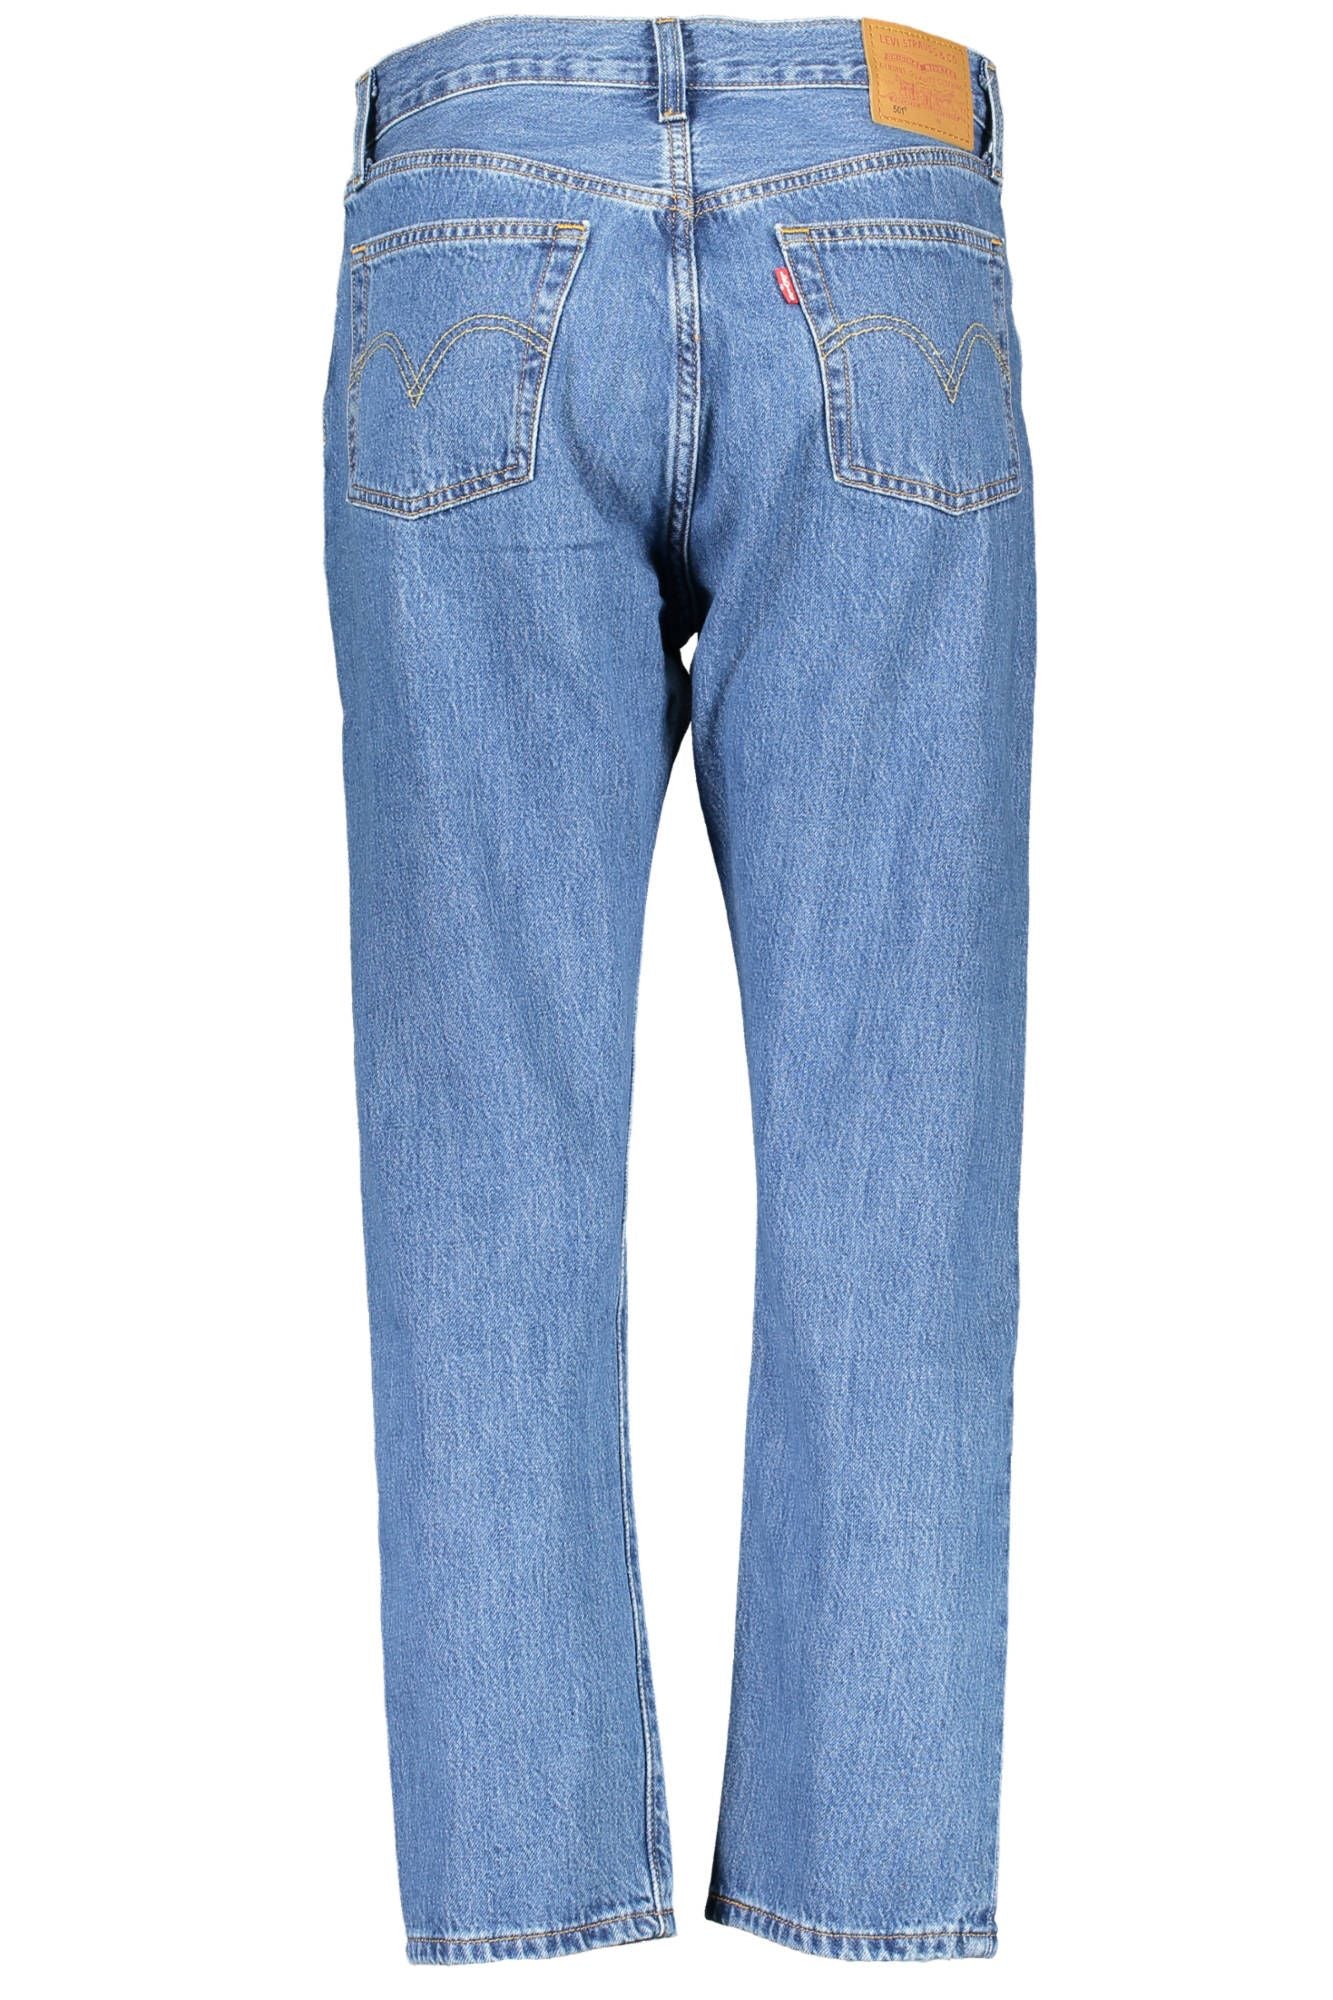 Chic Blue Cotton 5-Pocket Jeans for Women